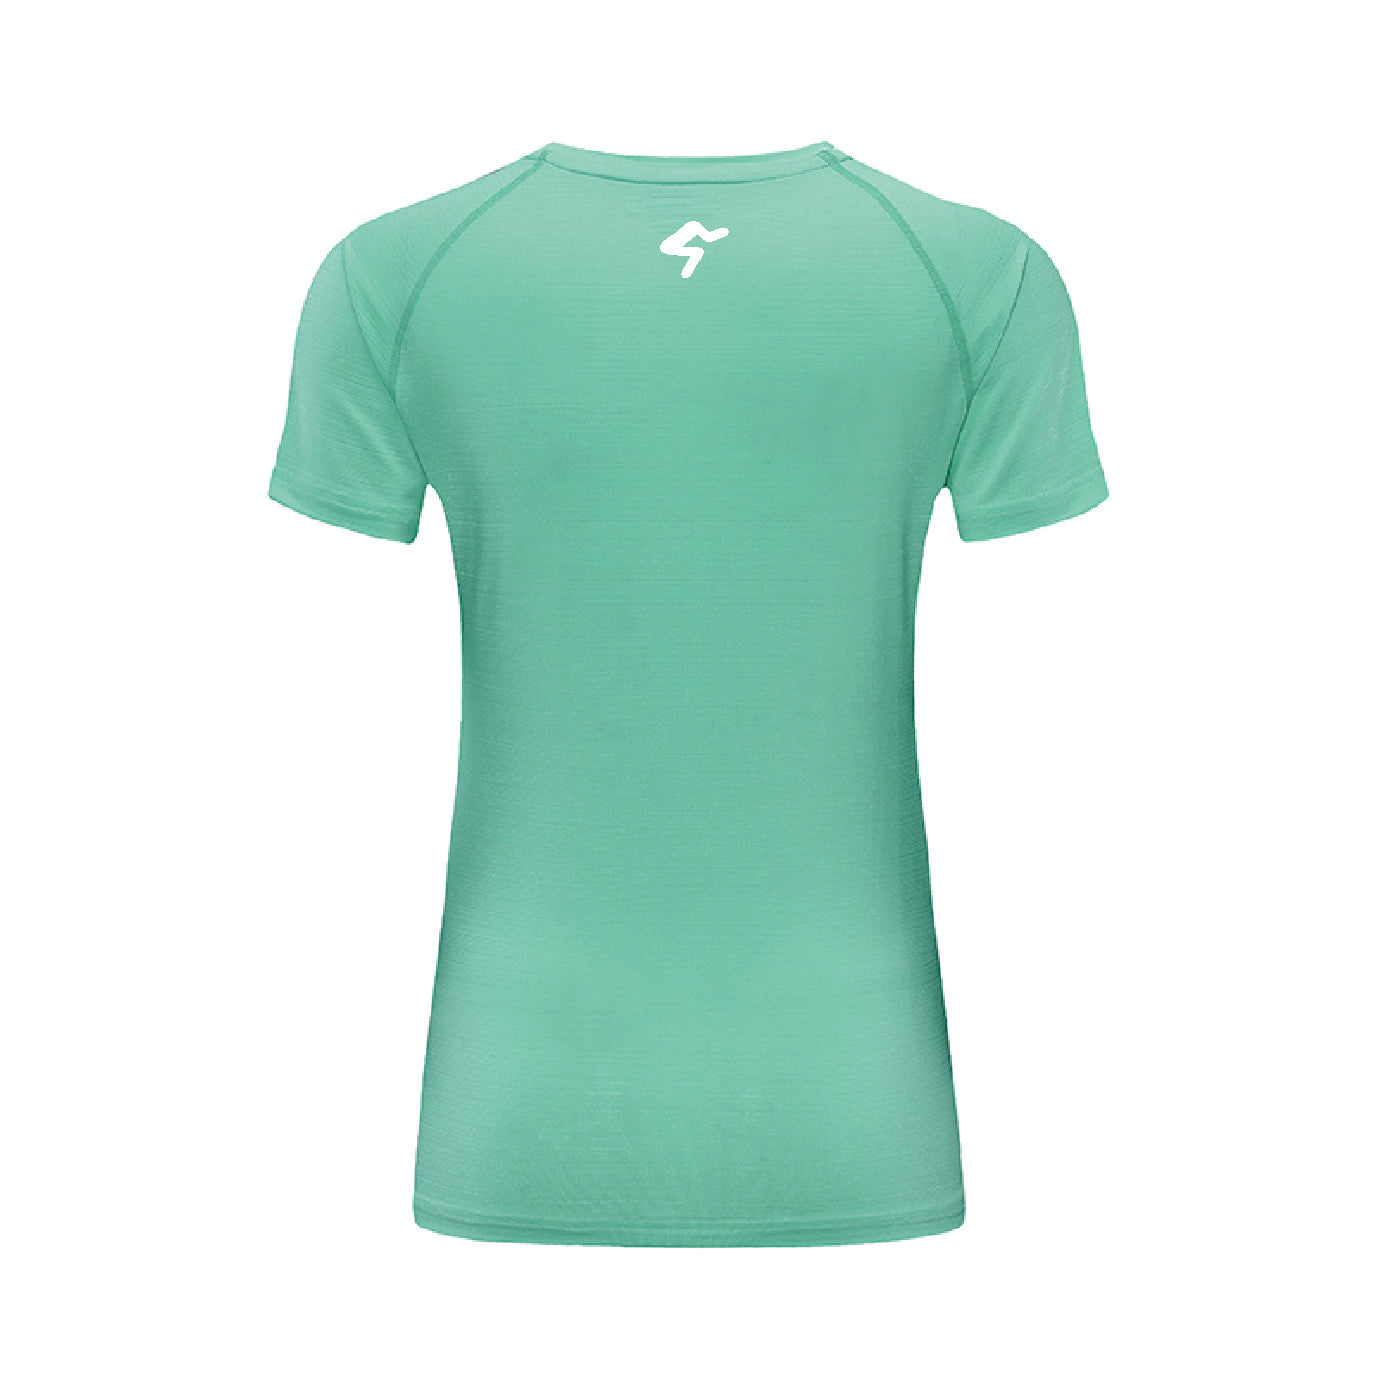 The Gymbum UK Squat QuickDry Women's Performance Sport T-Shirt